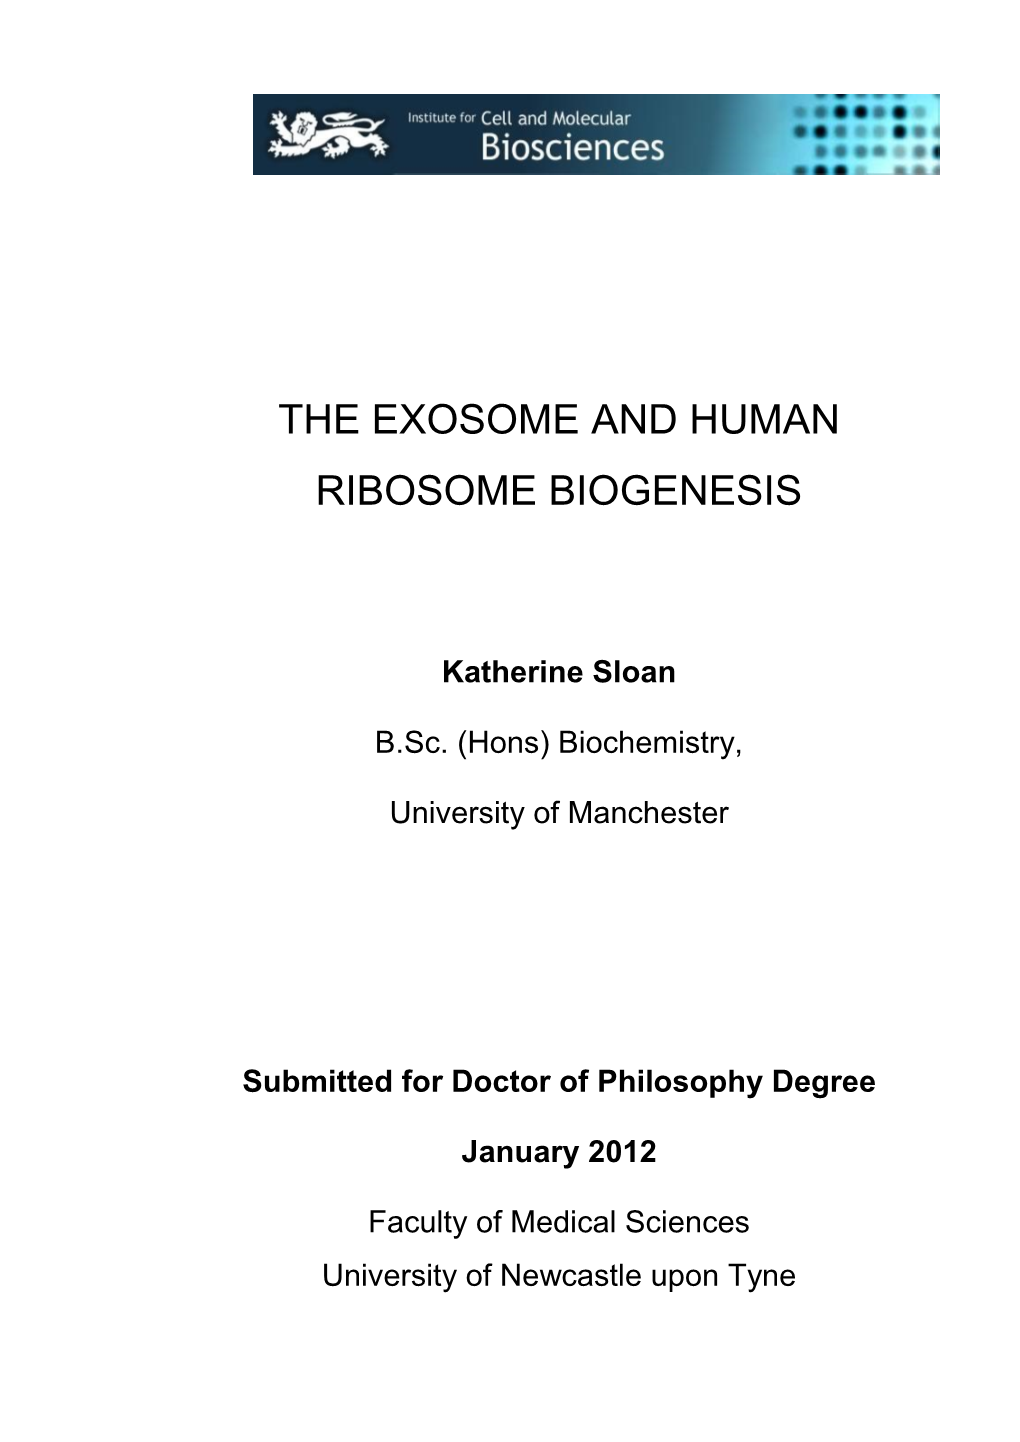 The Exosome and Human Ribosome Biogenesis